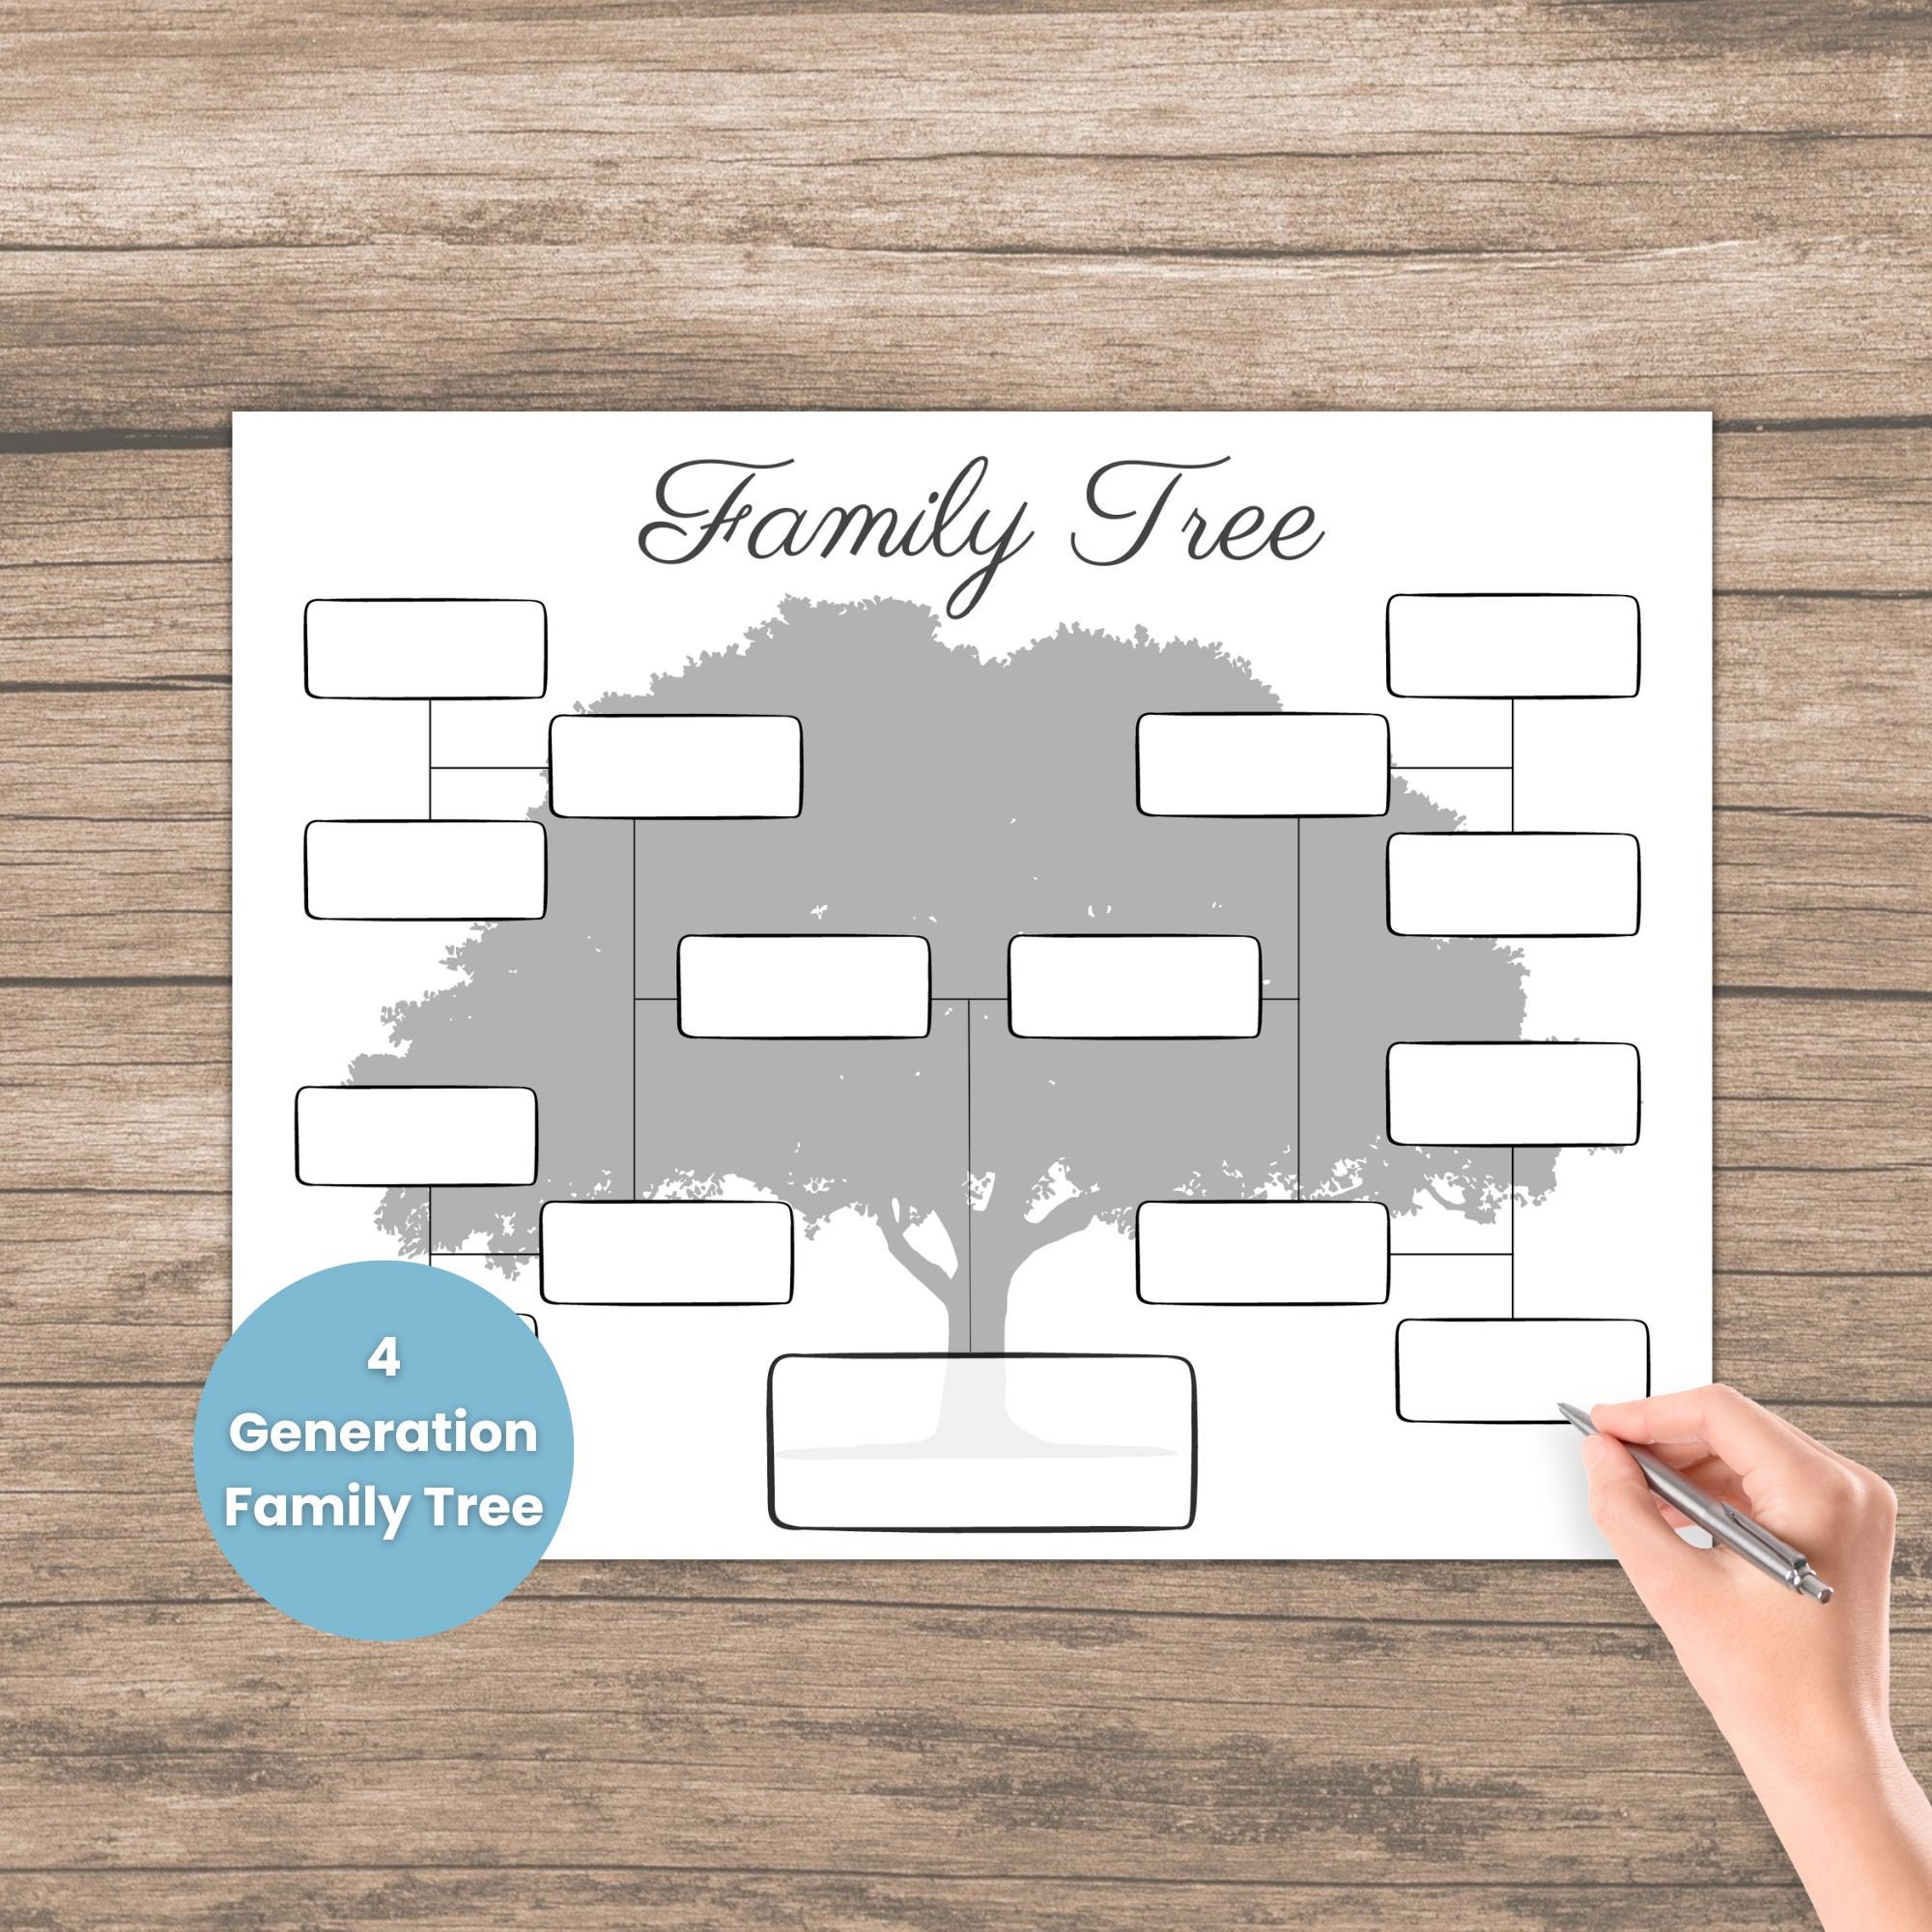 Fillable Family Tree Template Editable Genealogy Chart Family Tree Chart  Genealogy Template Genealogy Organizer 7 Generations Pedigree Chart 